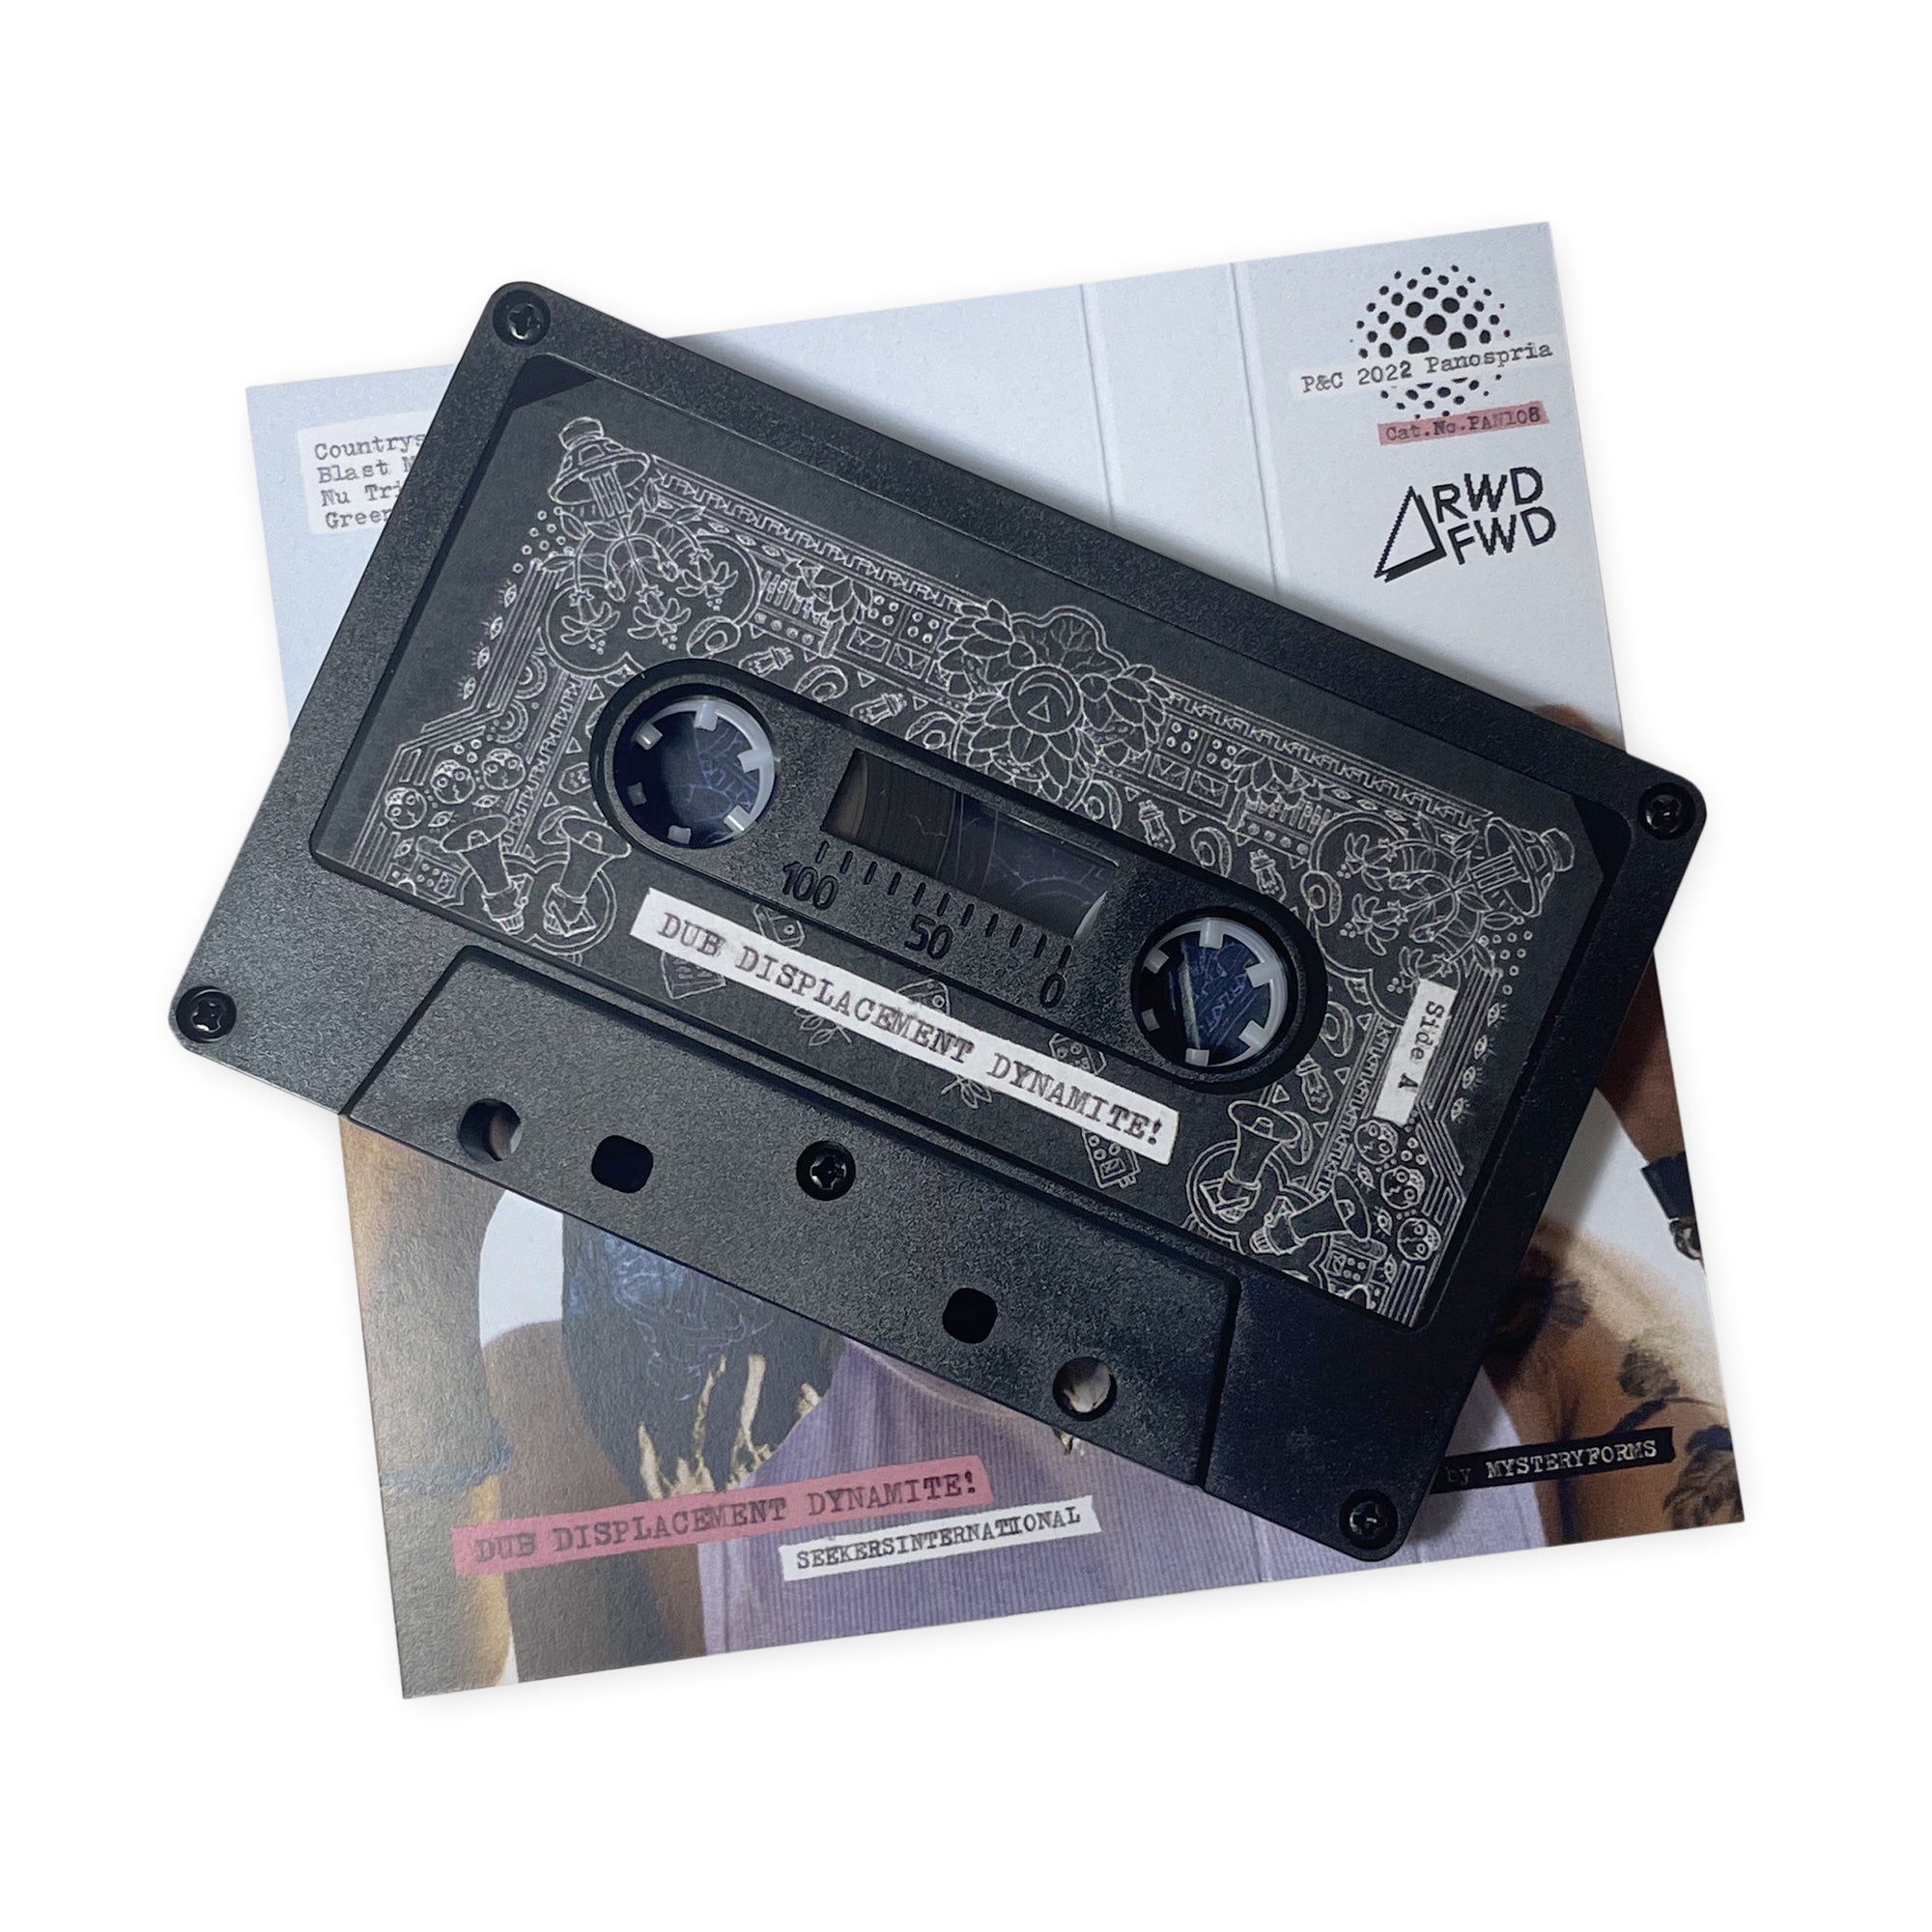 SEEKERSINTERNATIONAL -  Dub Displacement Dynamite! *RWDFWD Edition Cassette*